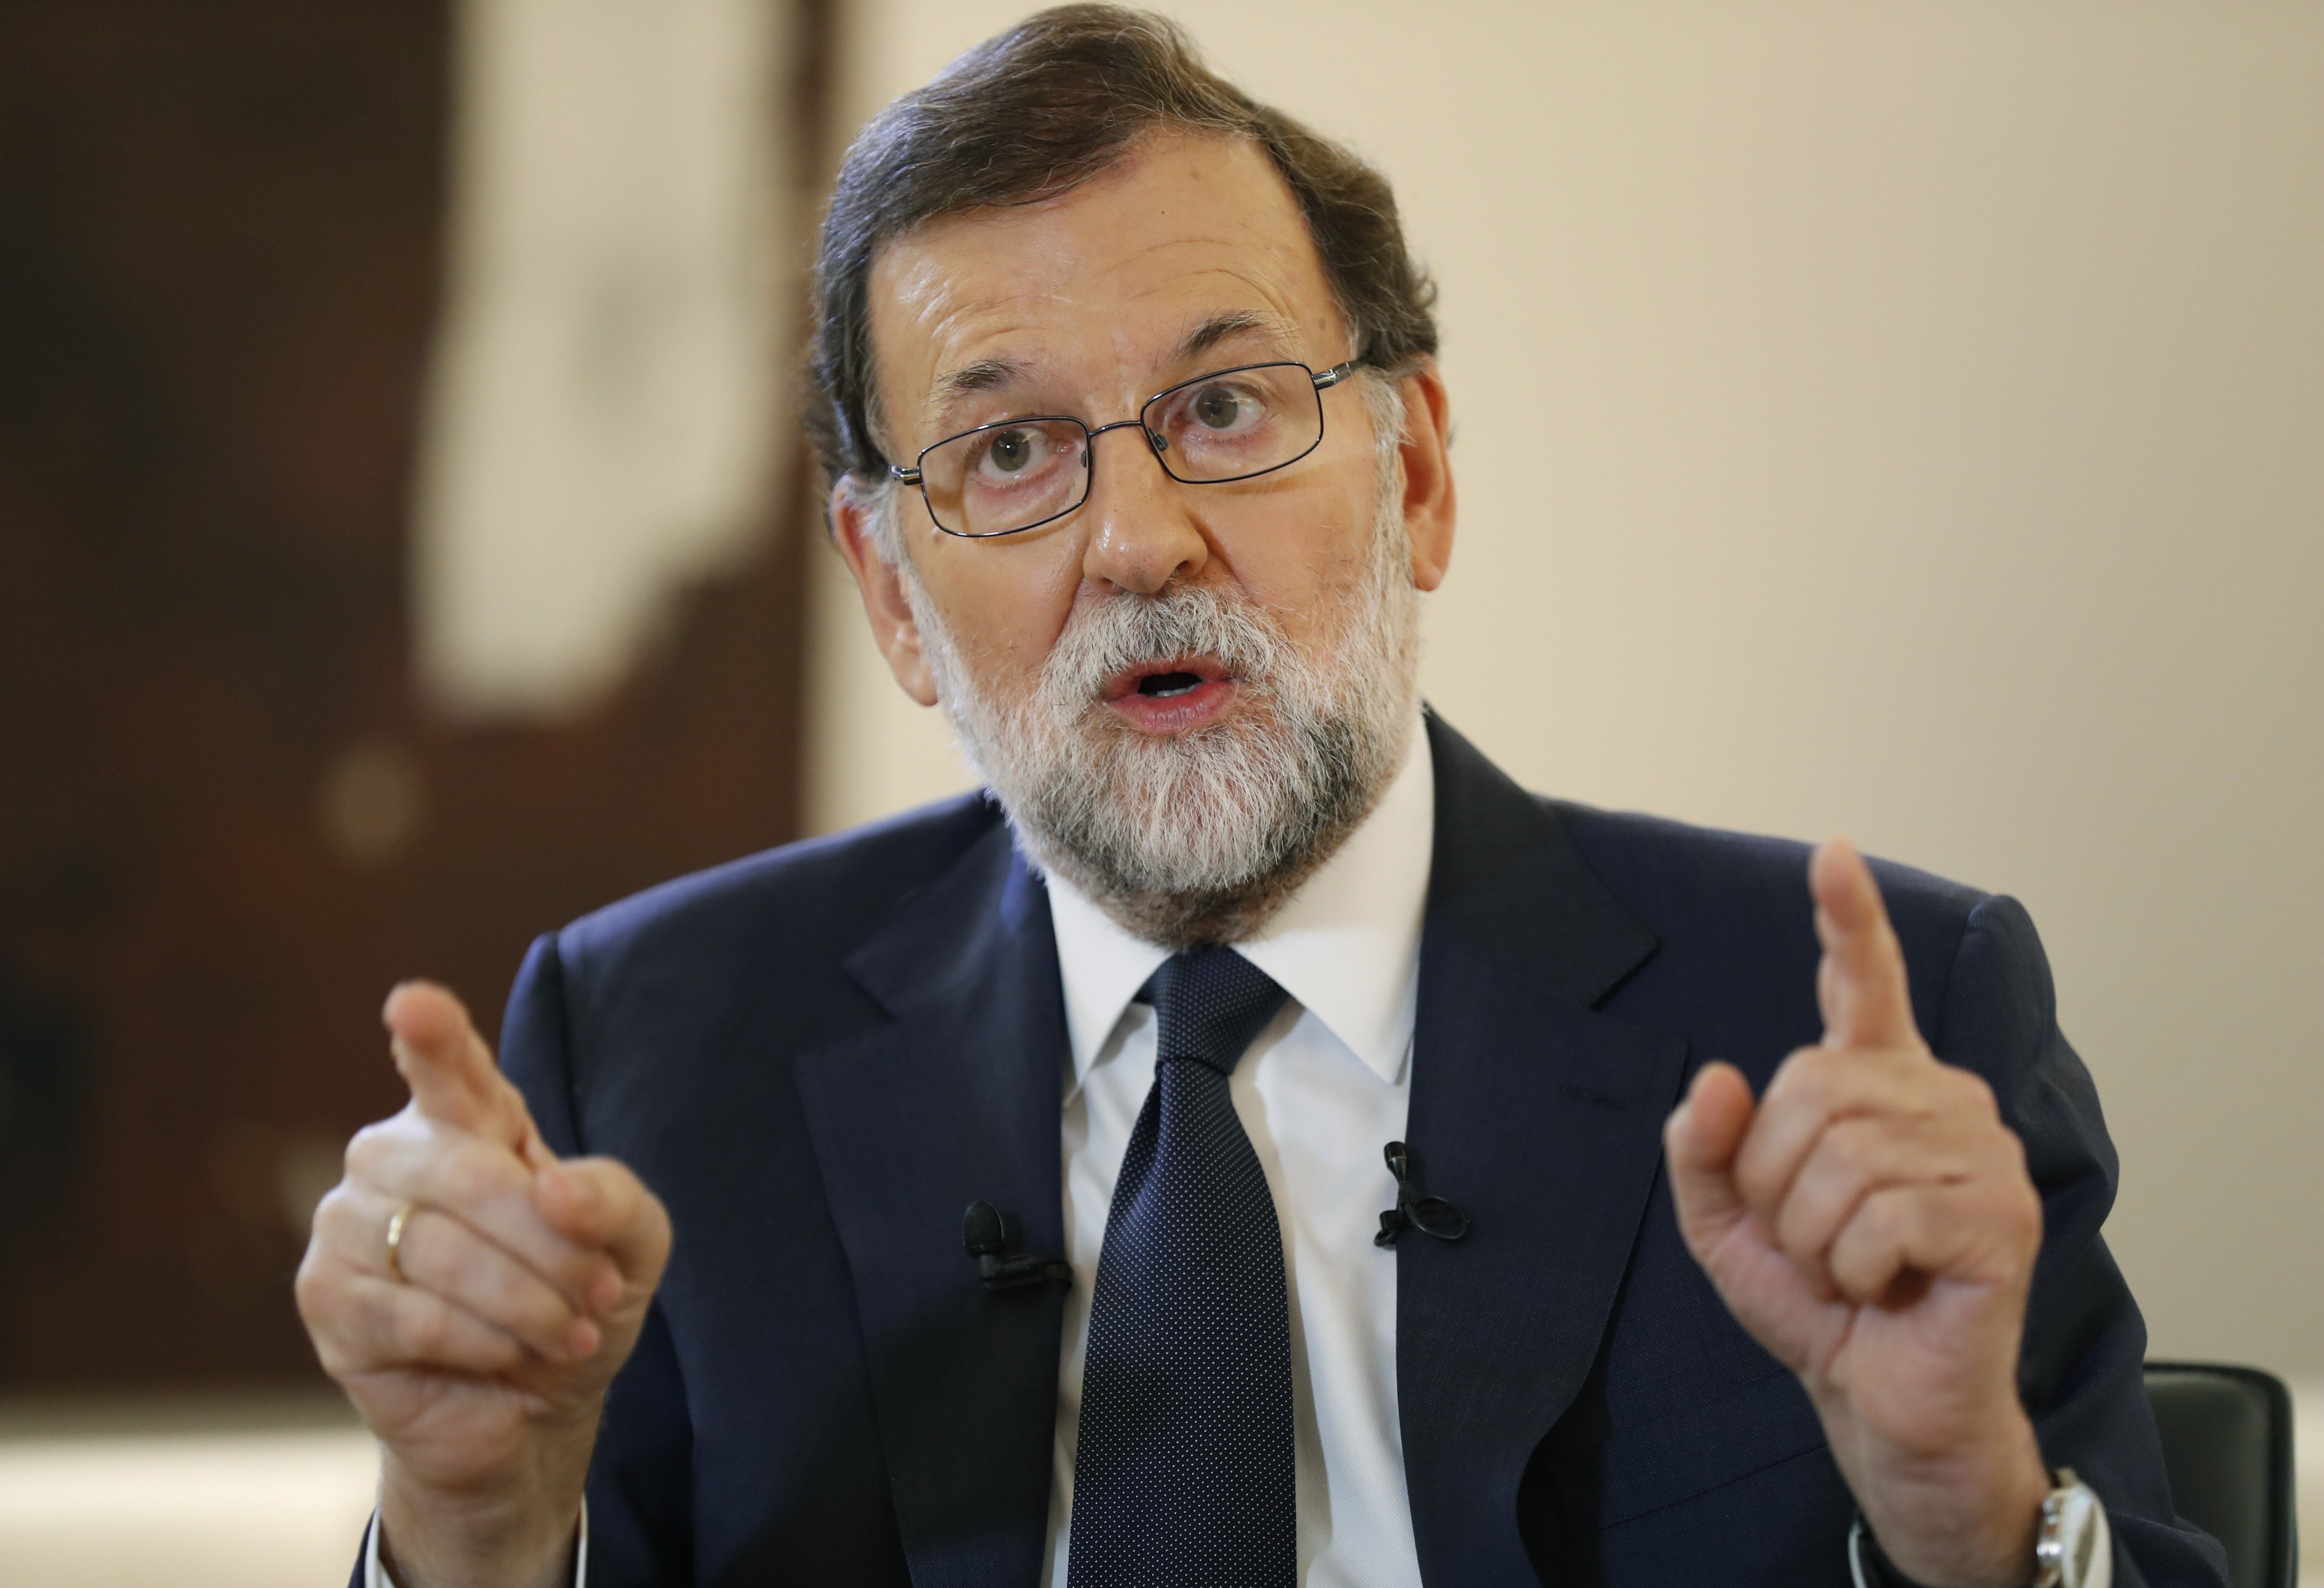 Spanish PM Rajoy opens the way to revoking Catalonia's autonomy